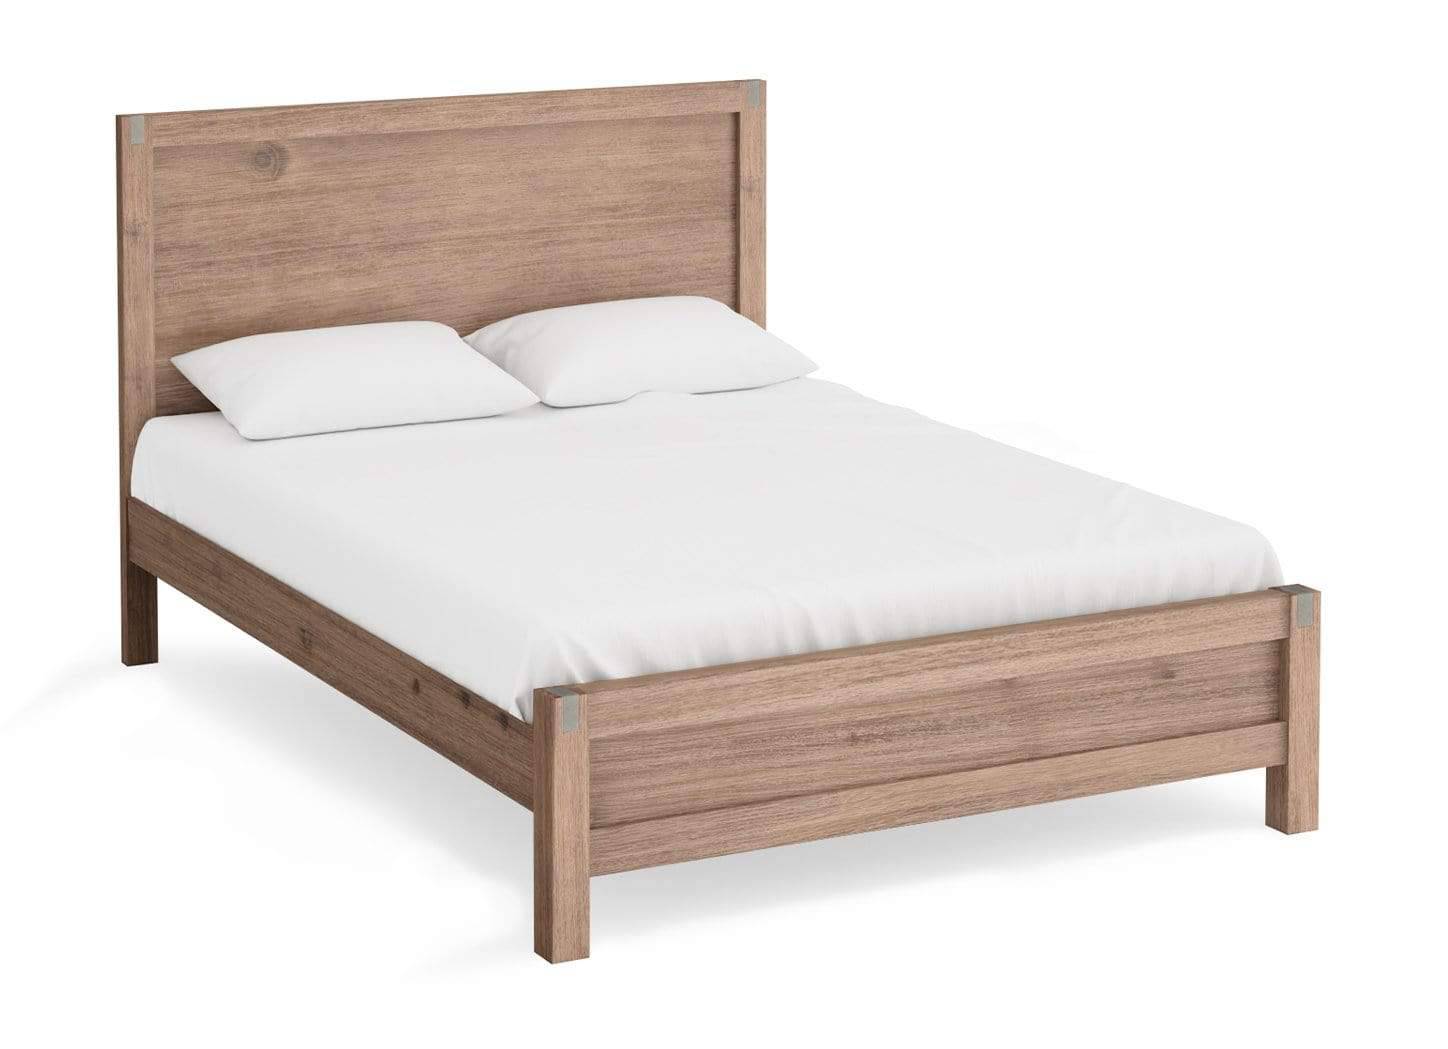 Nowra Queen Bed - Newstart Furniture